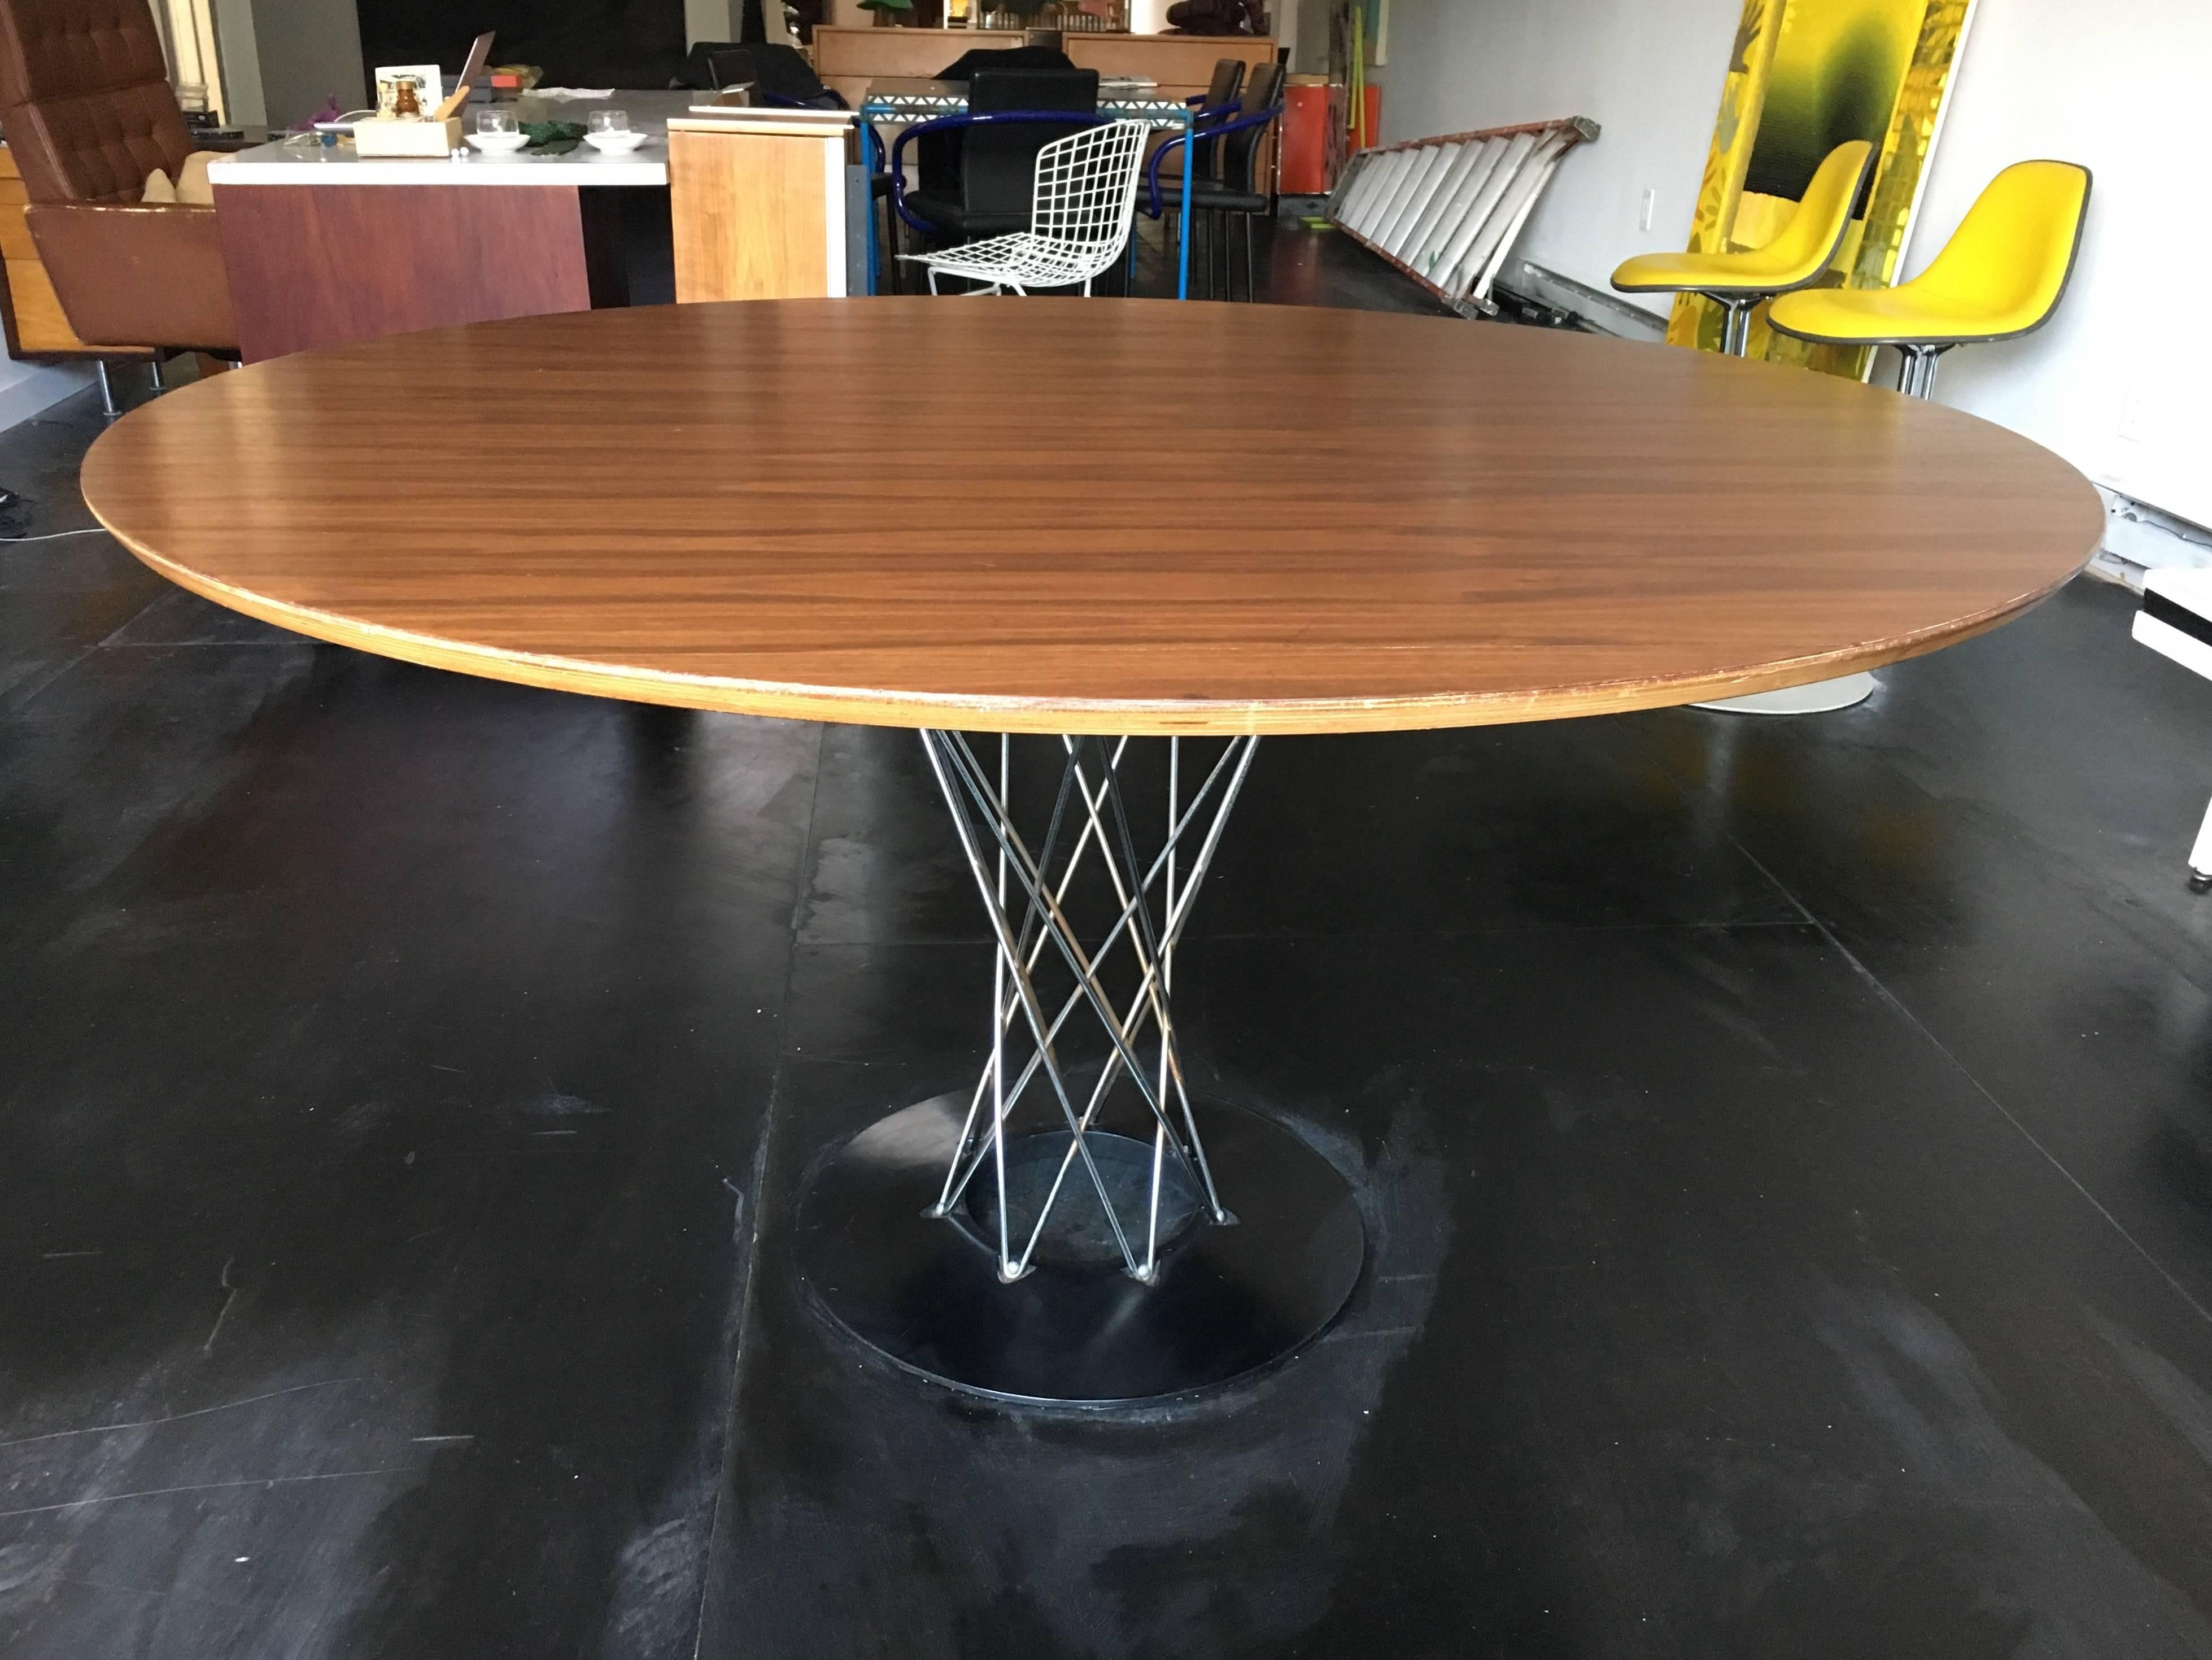 Cyclone table designed by Isamu Noguchi, 54